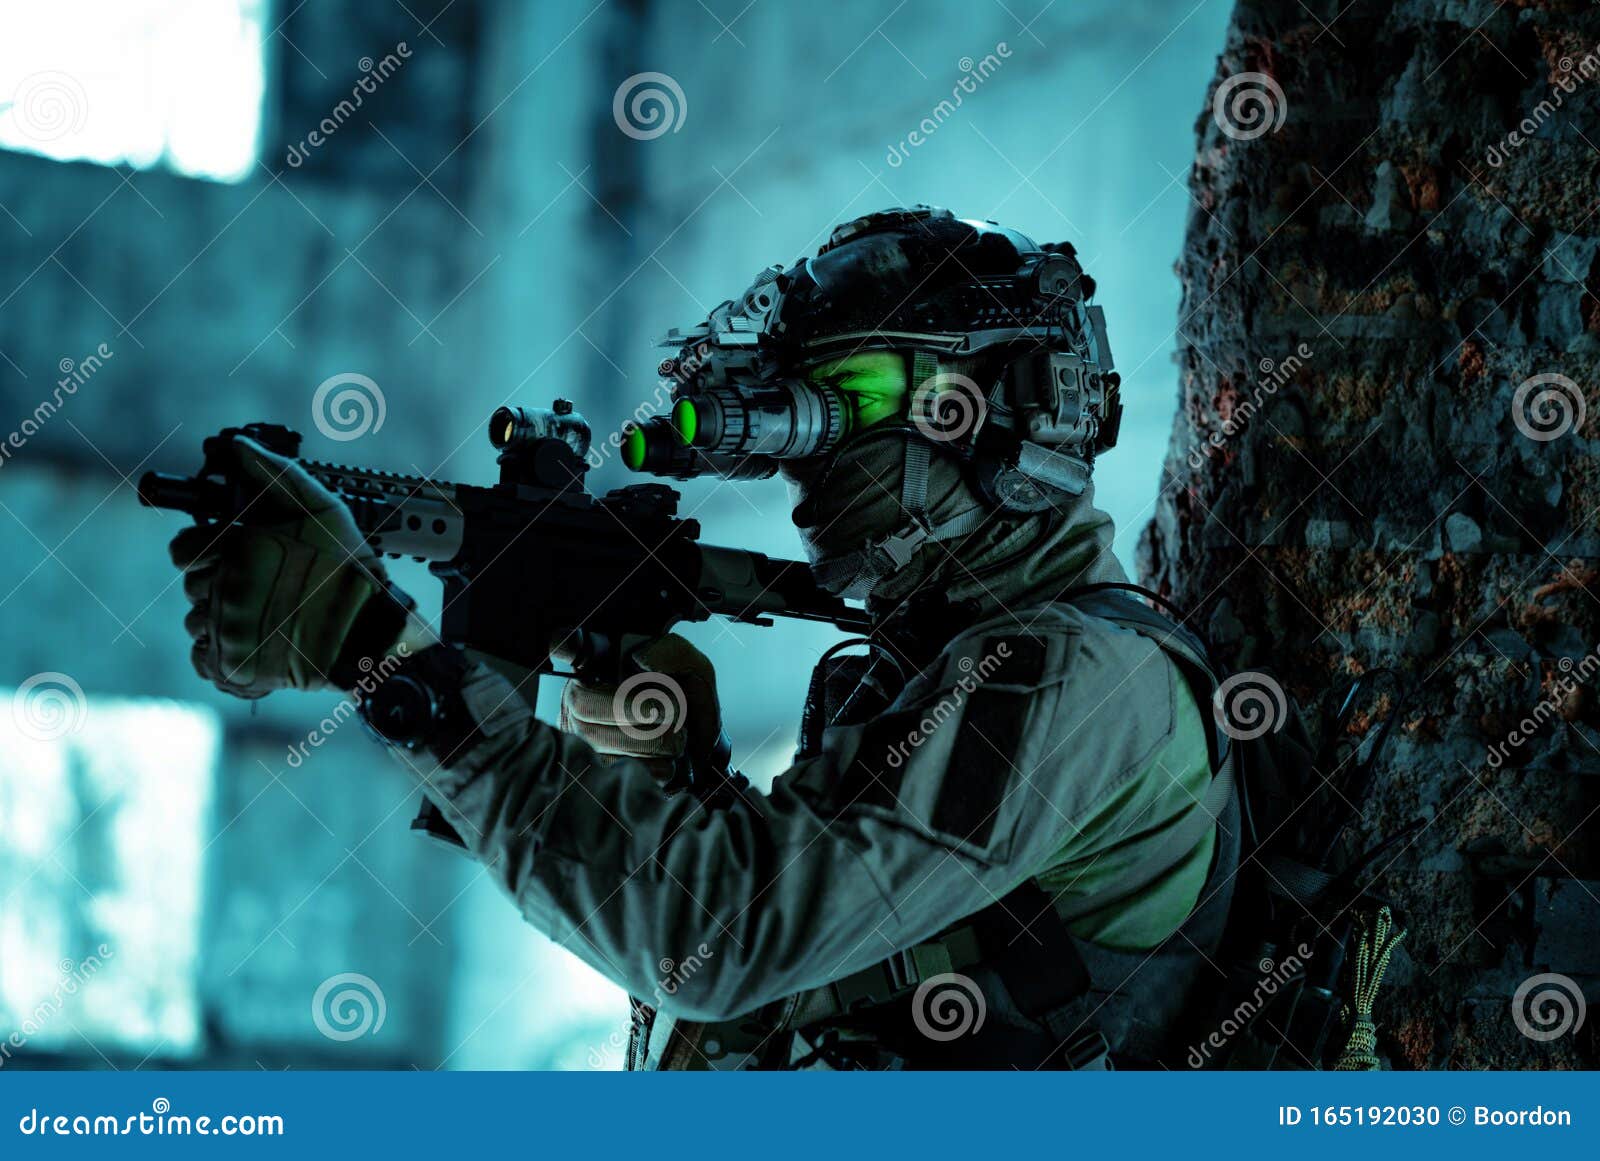 SKstalker CGi Men Army Gear Visors Infrared Rain Soldier Warrior Black  Clothing Night Vision Goggles Wallpaper  Resolution2300x3100  ID1347476   wallhacom